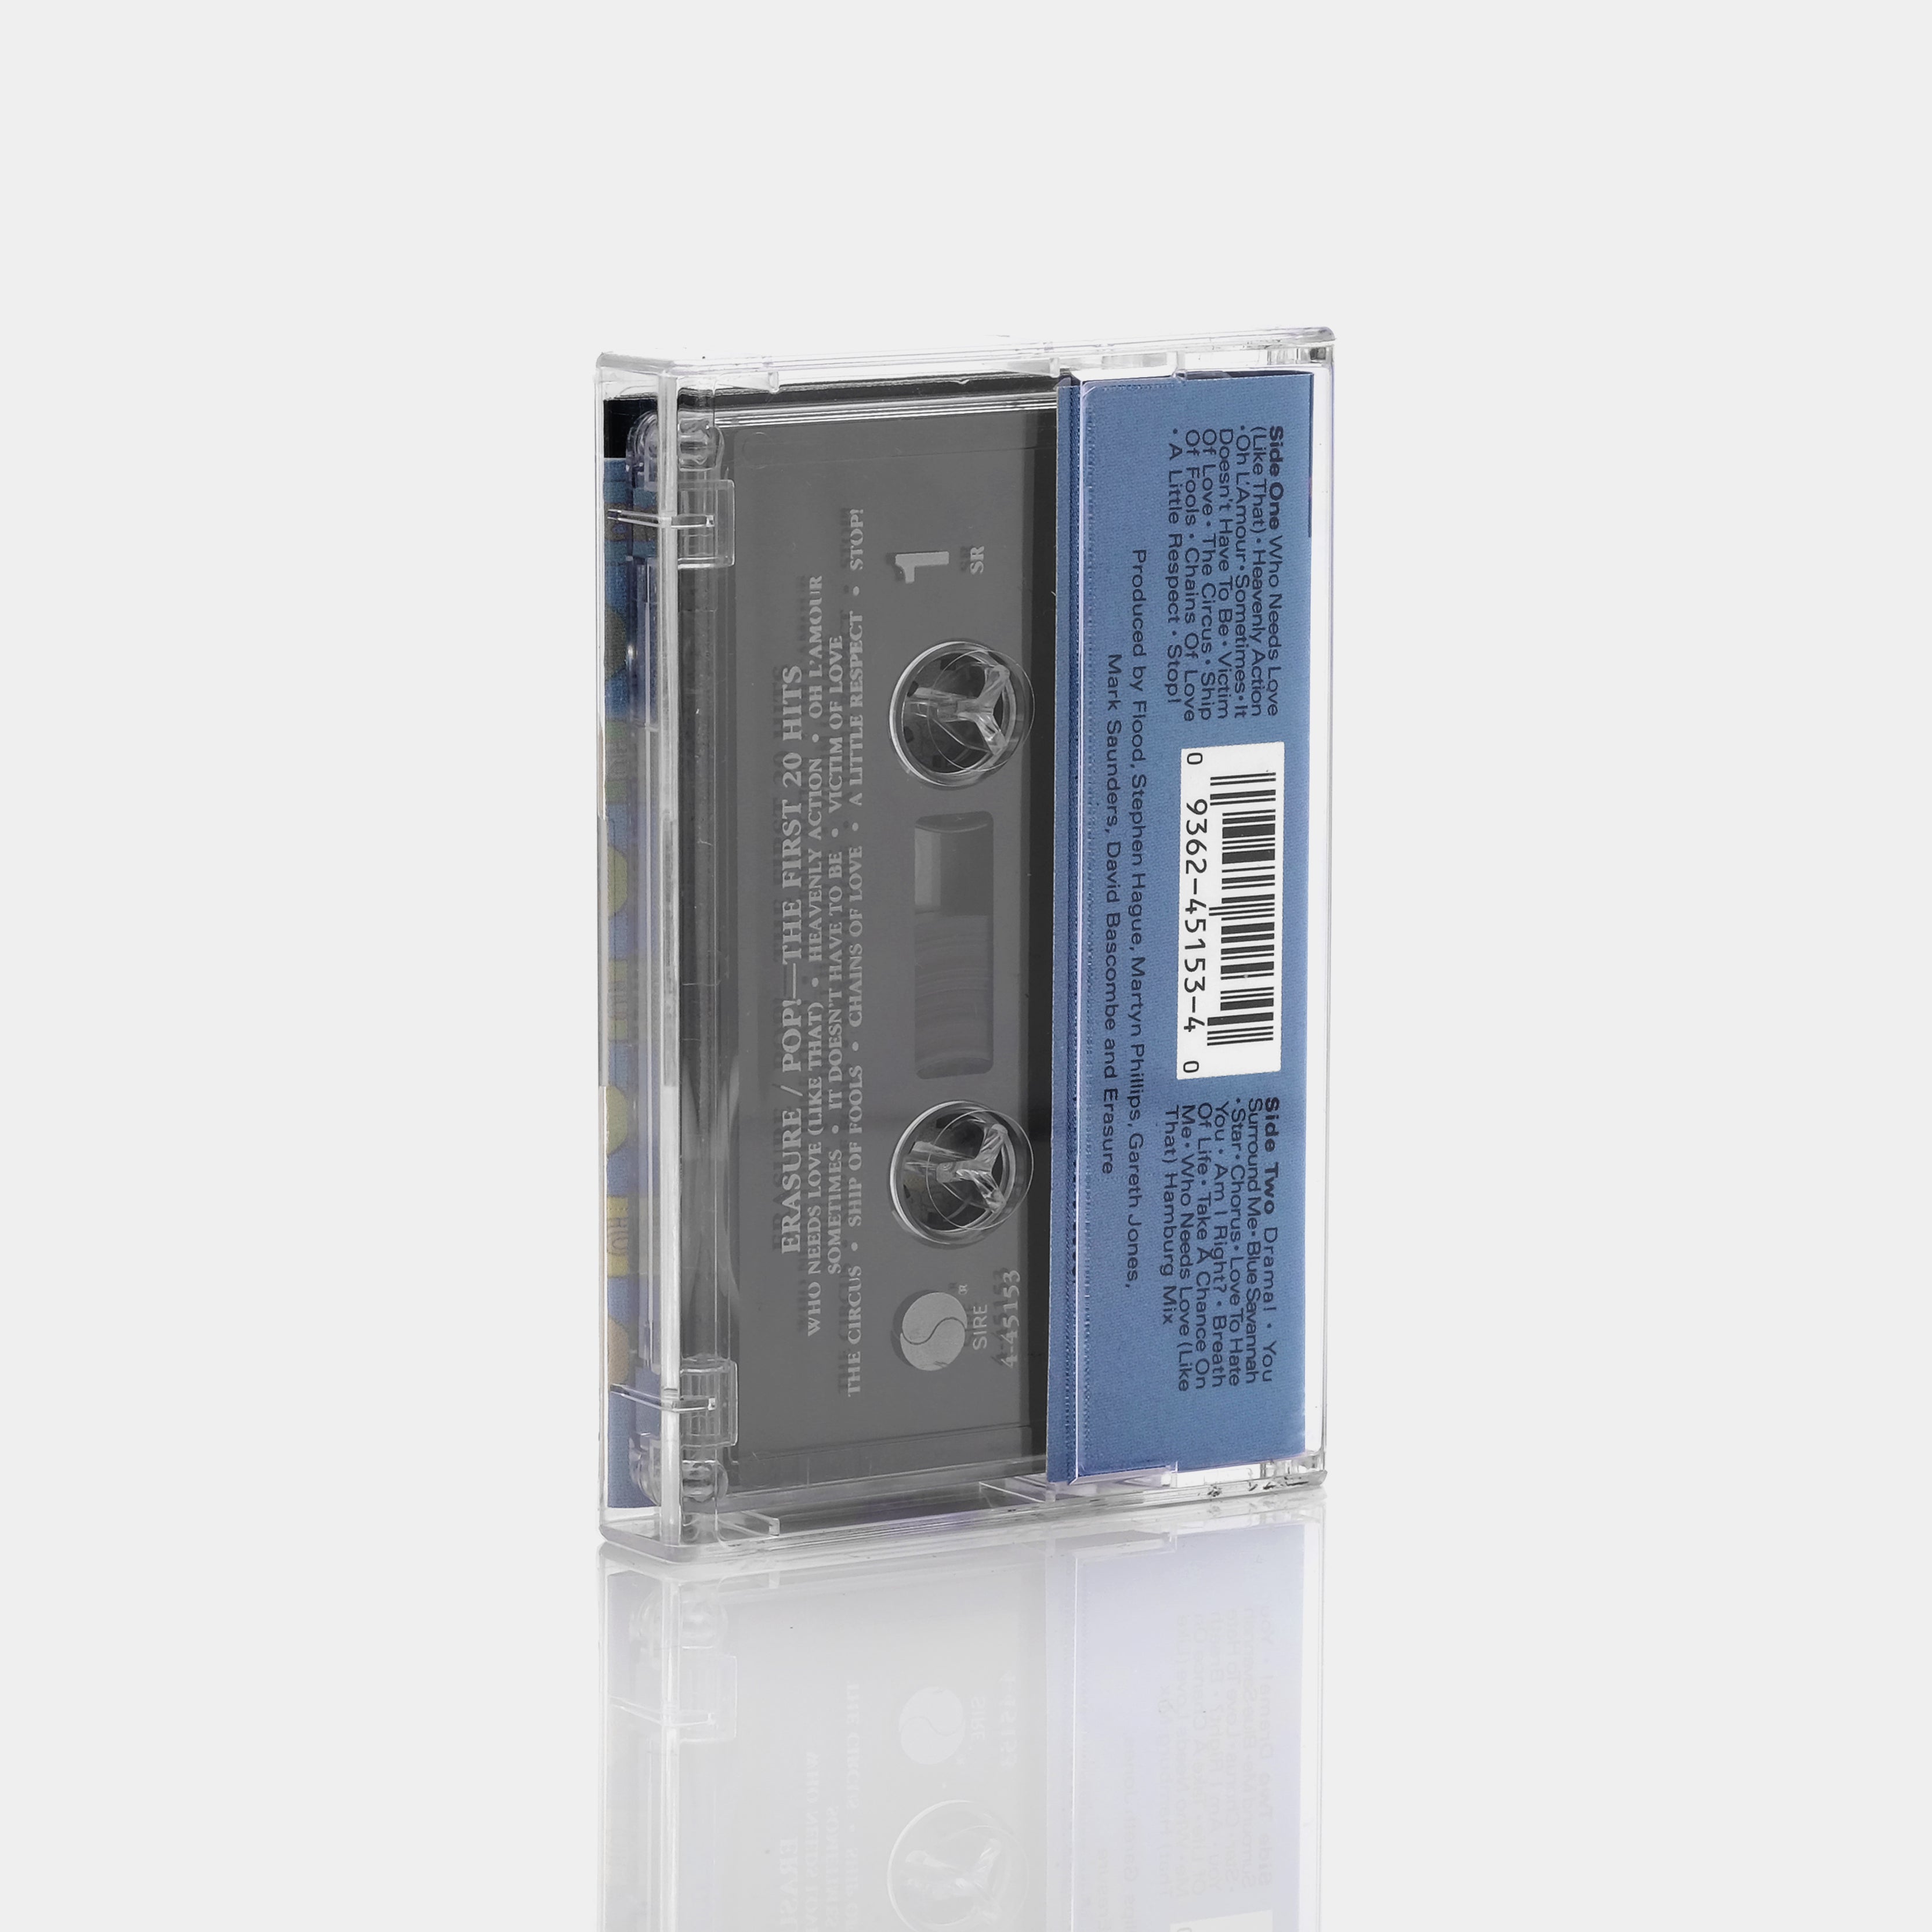 Erasure - Pop! The First 20 Hits Cassette Tape